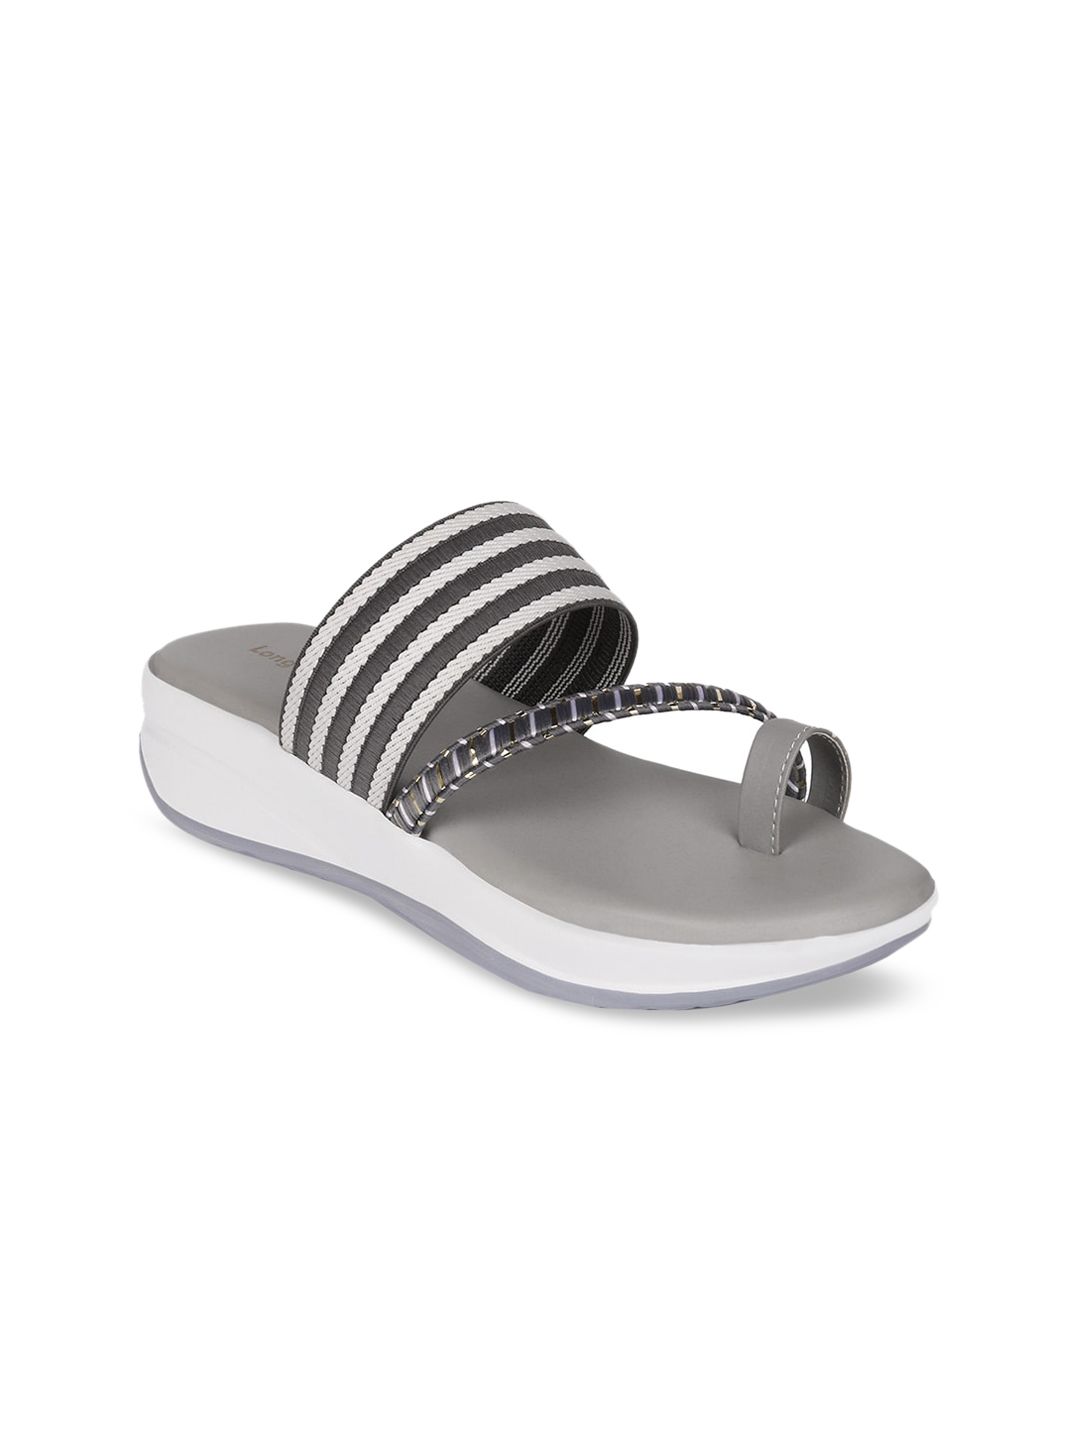 Longwalk Grey & White Striped Work Comfort Sandals Price in India